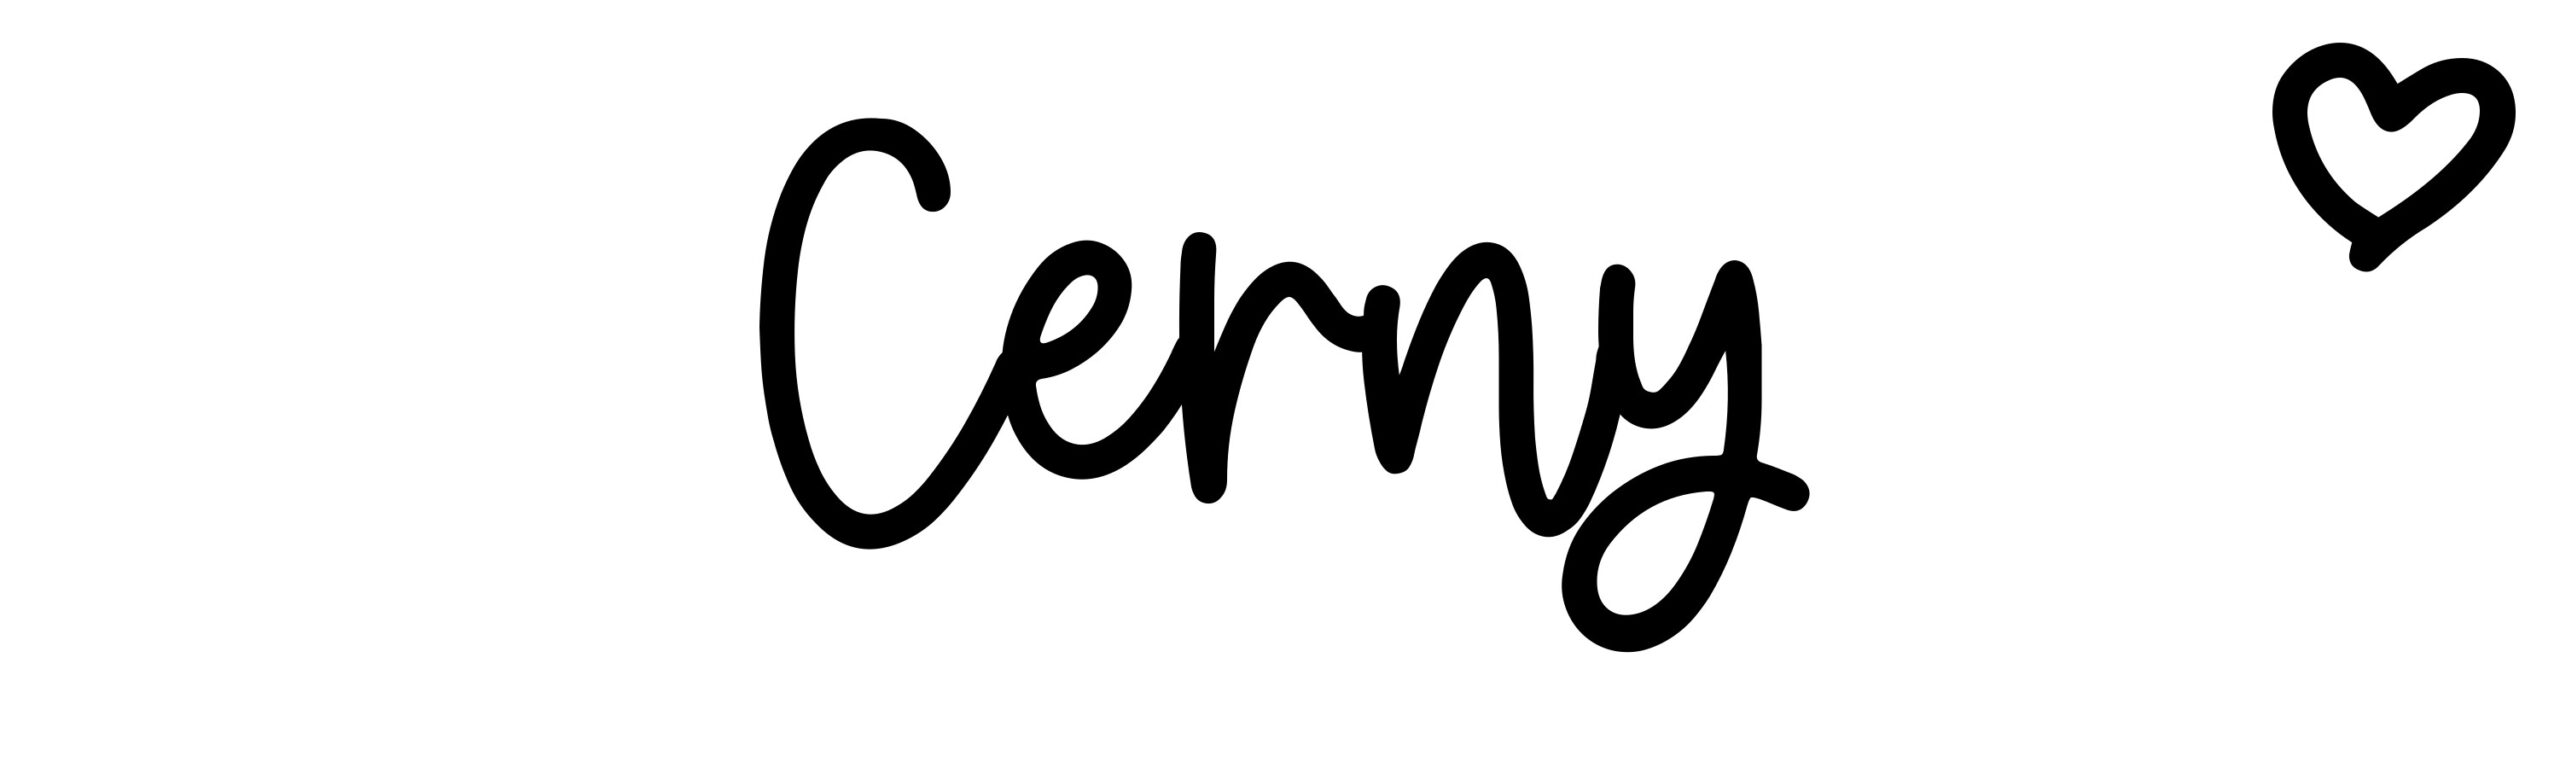 Best of Cerny last name origin